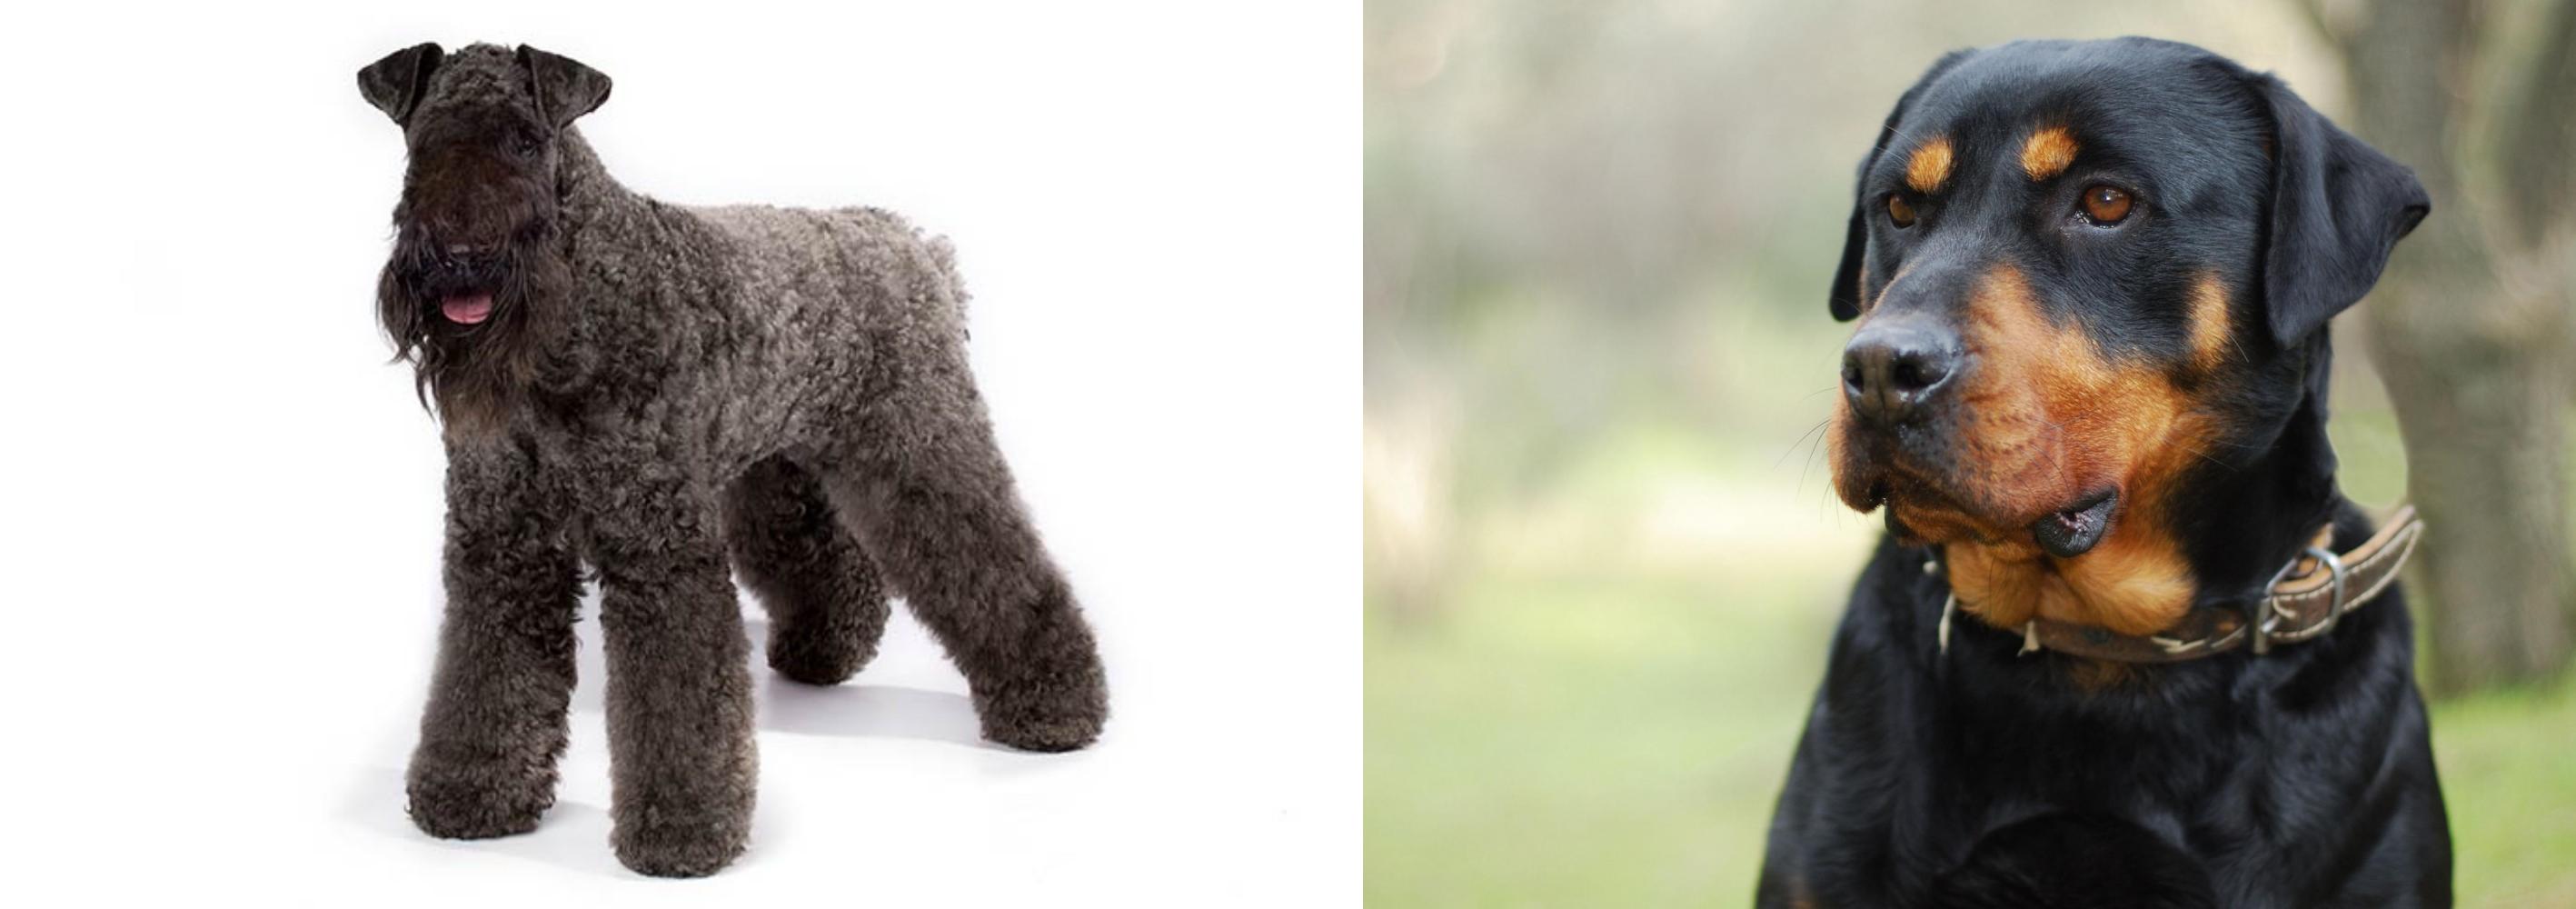 Kerry Blue Terrier Vs Rottweiler Breed Comparison